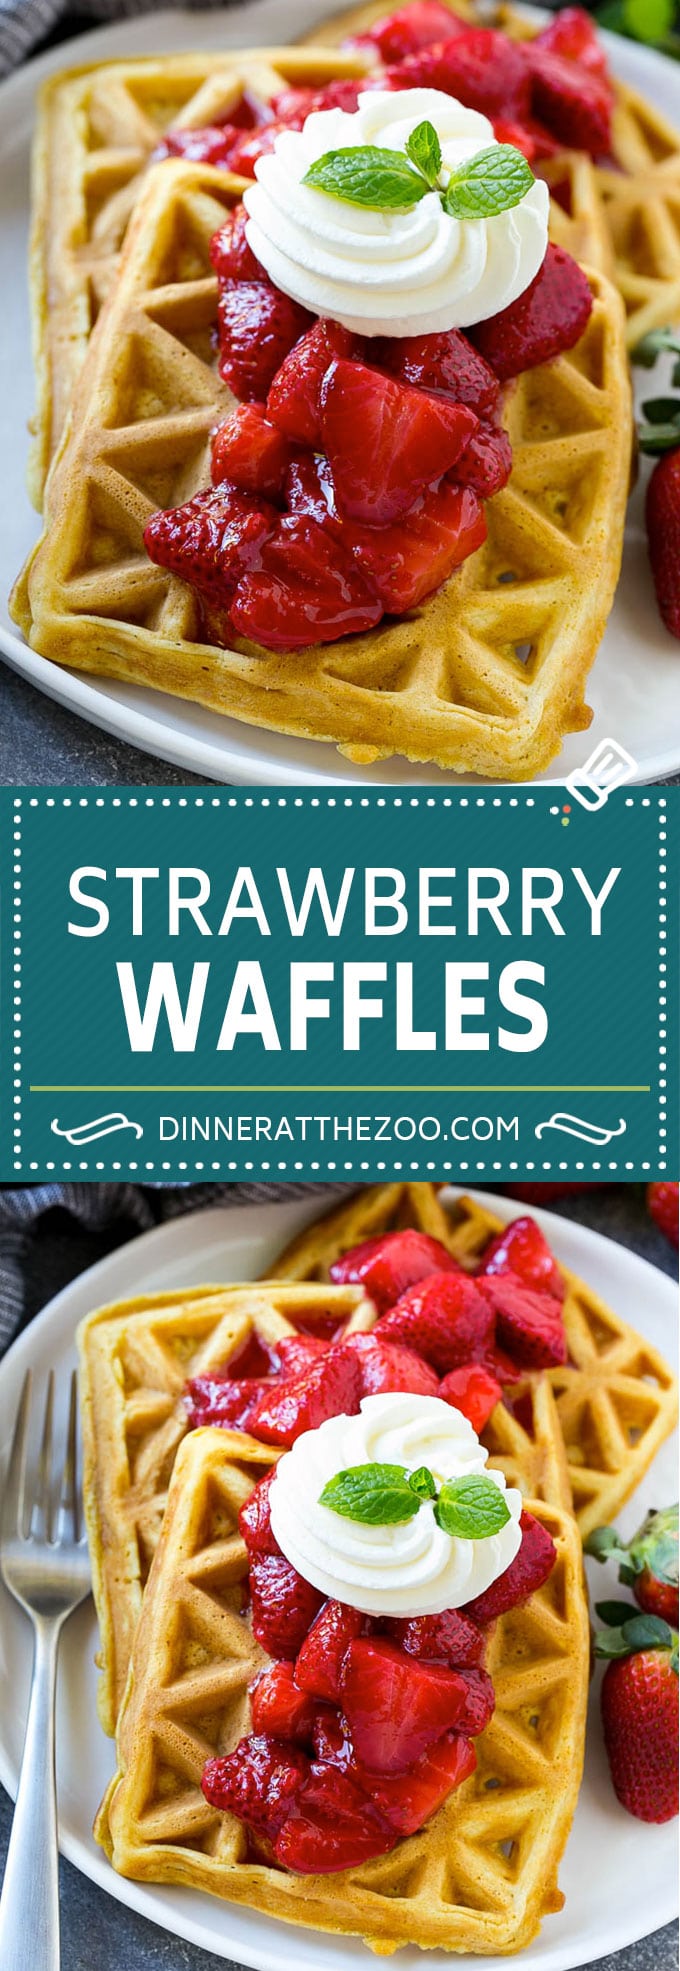 Strawberry Waffles | Homemade Waffles Recipe | Waffles with Strawberry Sauce | Homemade Strawberry Sauce #strawberry #waffles #breakfast #dinneratthezoo